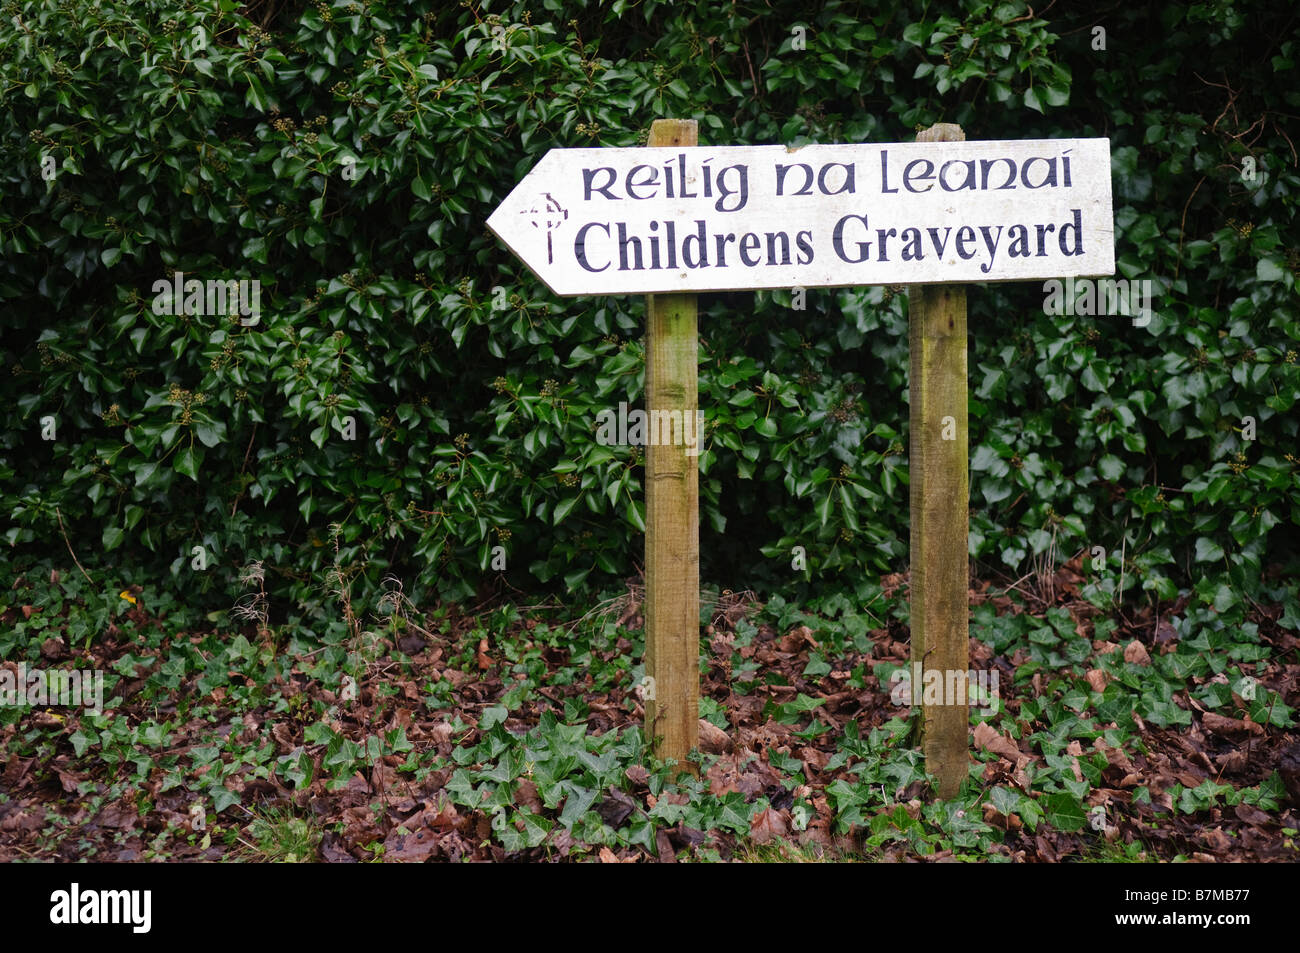 Direction sign to an Children's Graveyard in Ireland, in English and Irish Gaelic Stock Photo